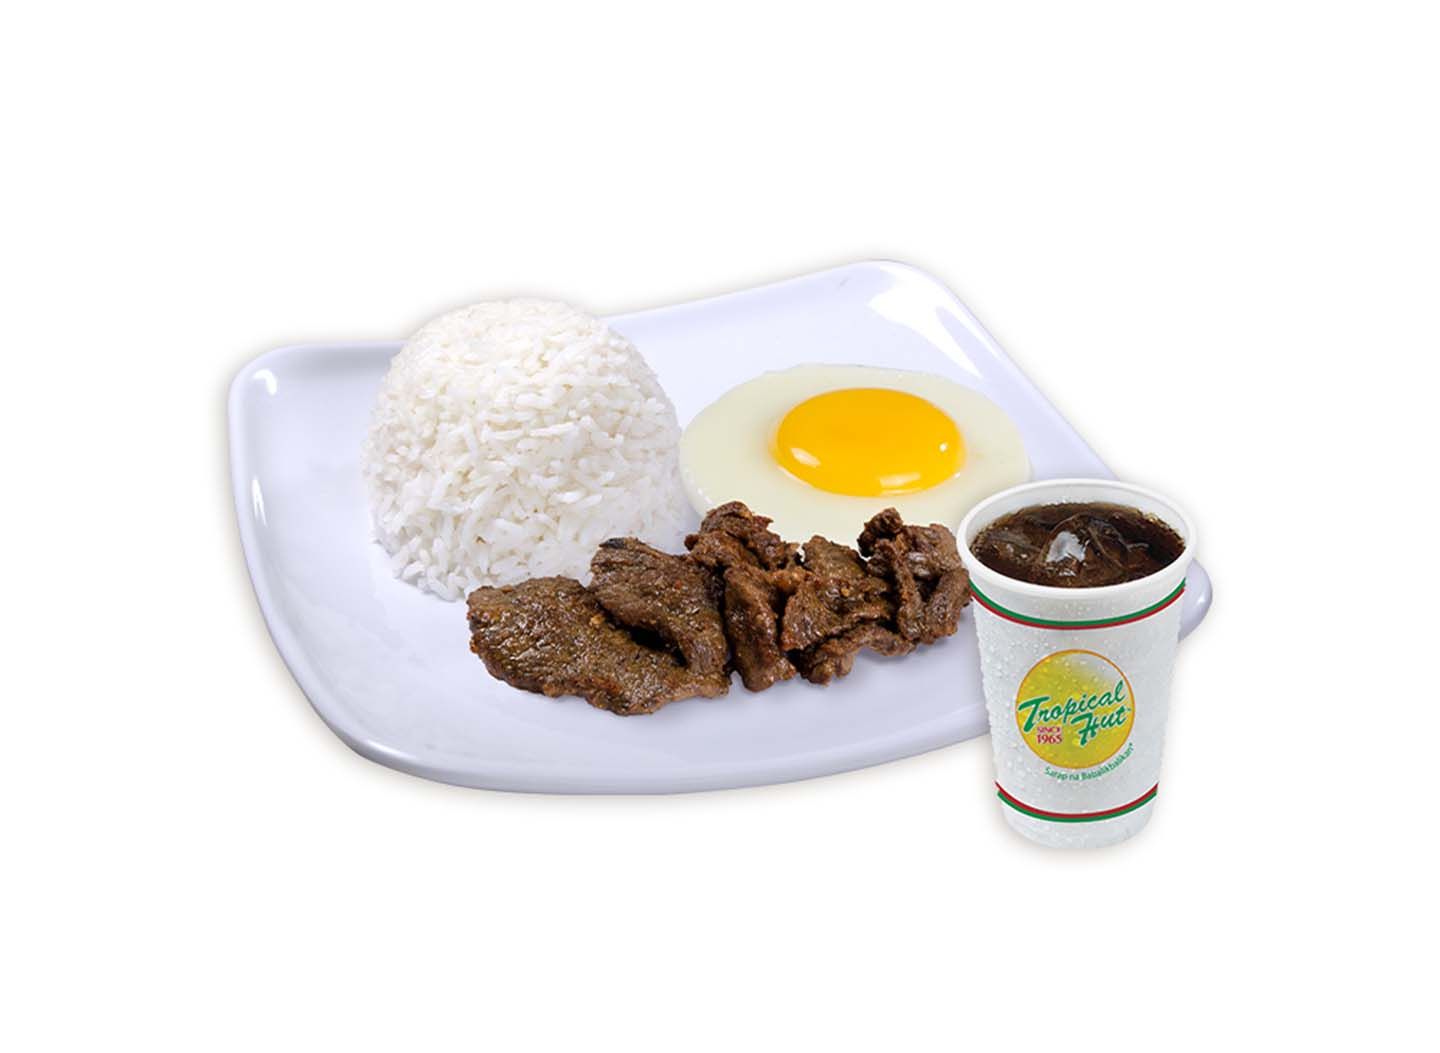 Tapa, Egg, Rice, Regular Softdrink - Value Meal